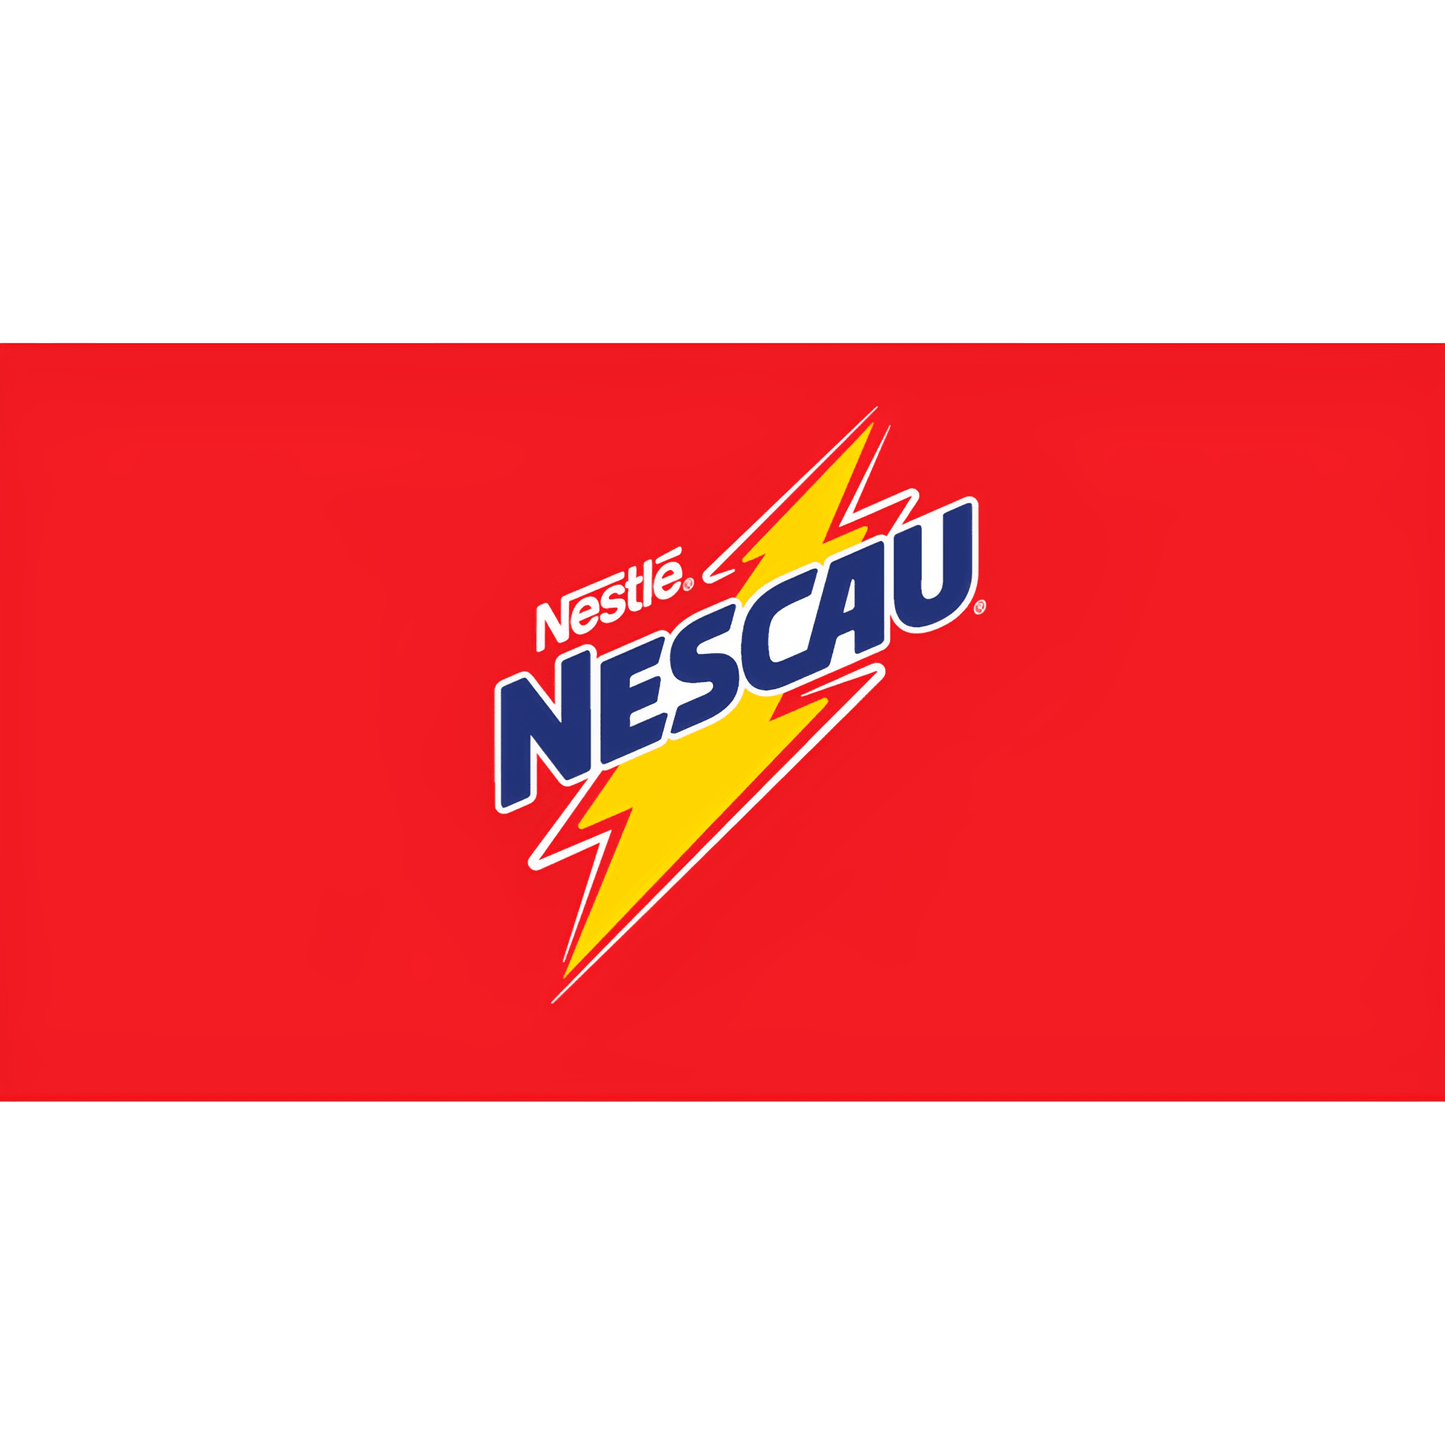 Nestlé Nescau 33% Less Sugars 13.40 oz. (Pack of 2) - Brazilian Shop